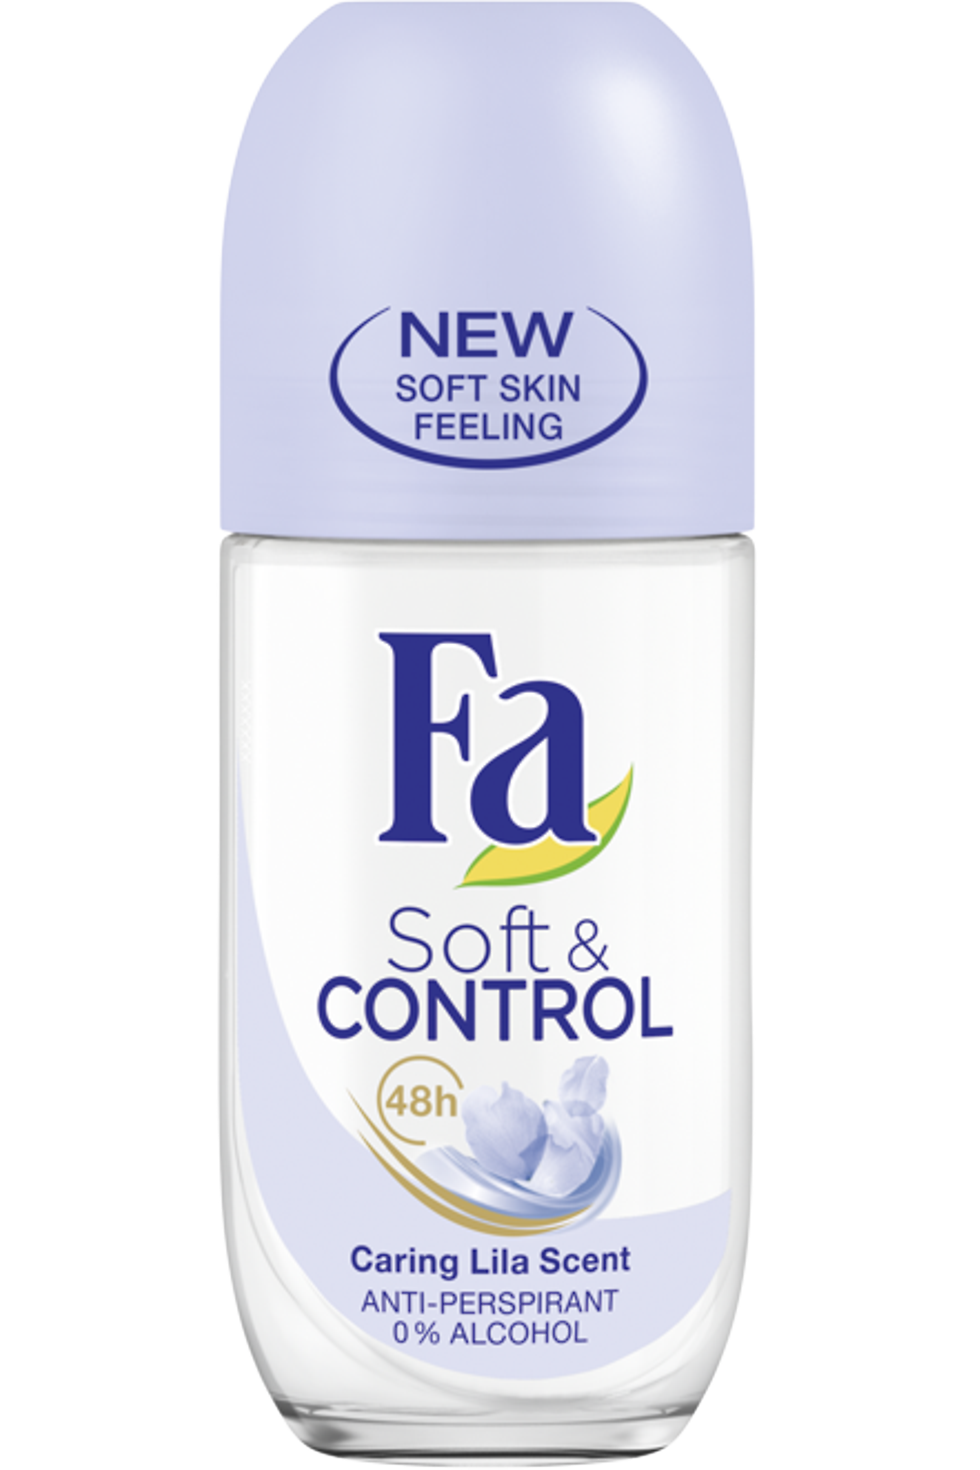 Fa Soft & Control Care - ošetrujúci roll-on s vôňou fialky